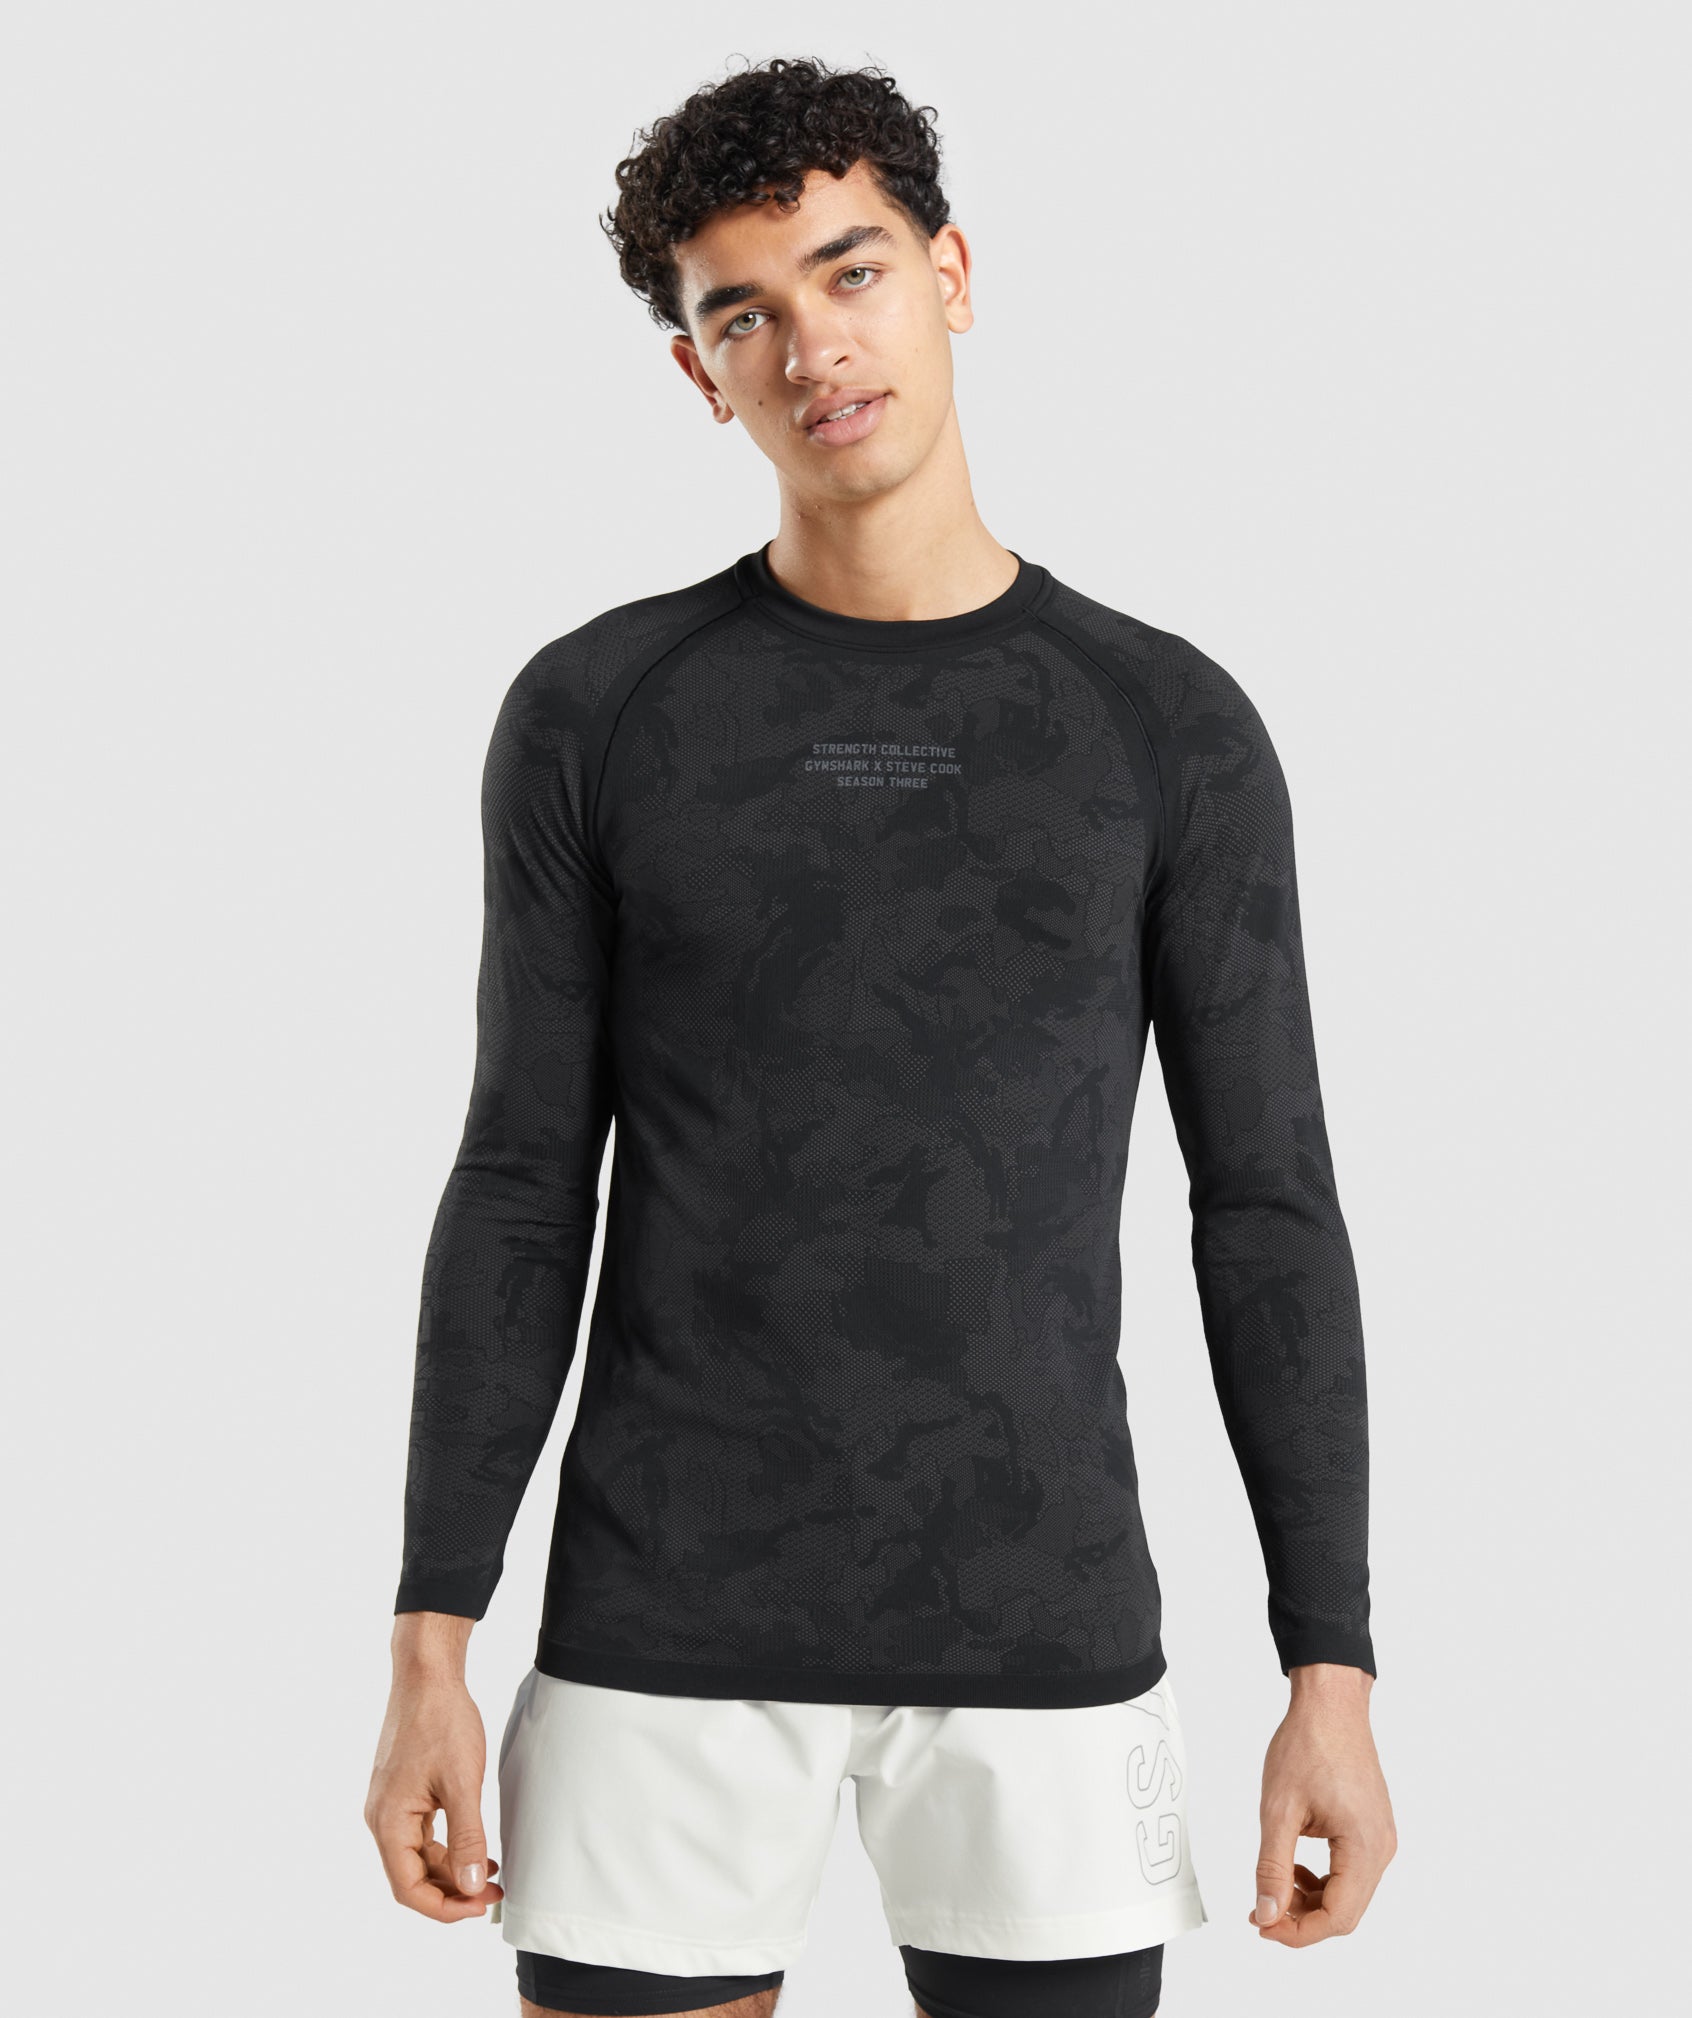 Gymshark//Steve Cook Long Sleeve Seamless T-Shirt in Black/Graphite Grey - view 1